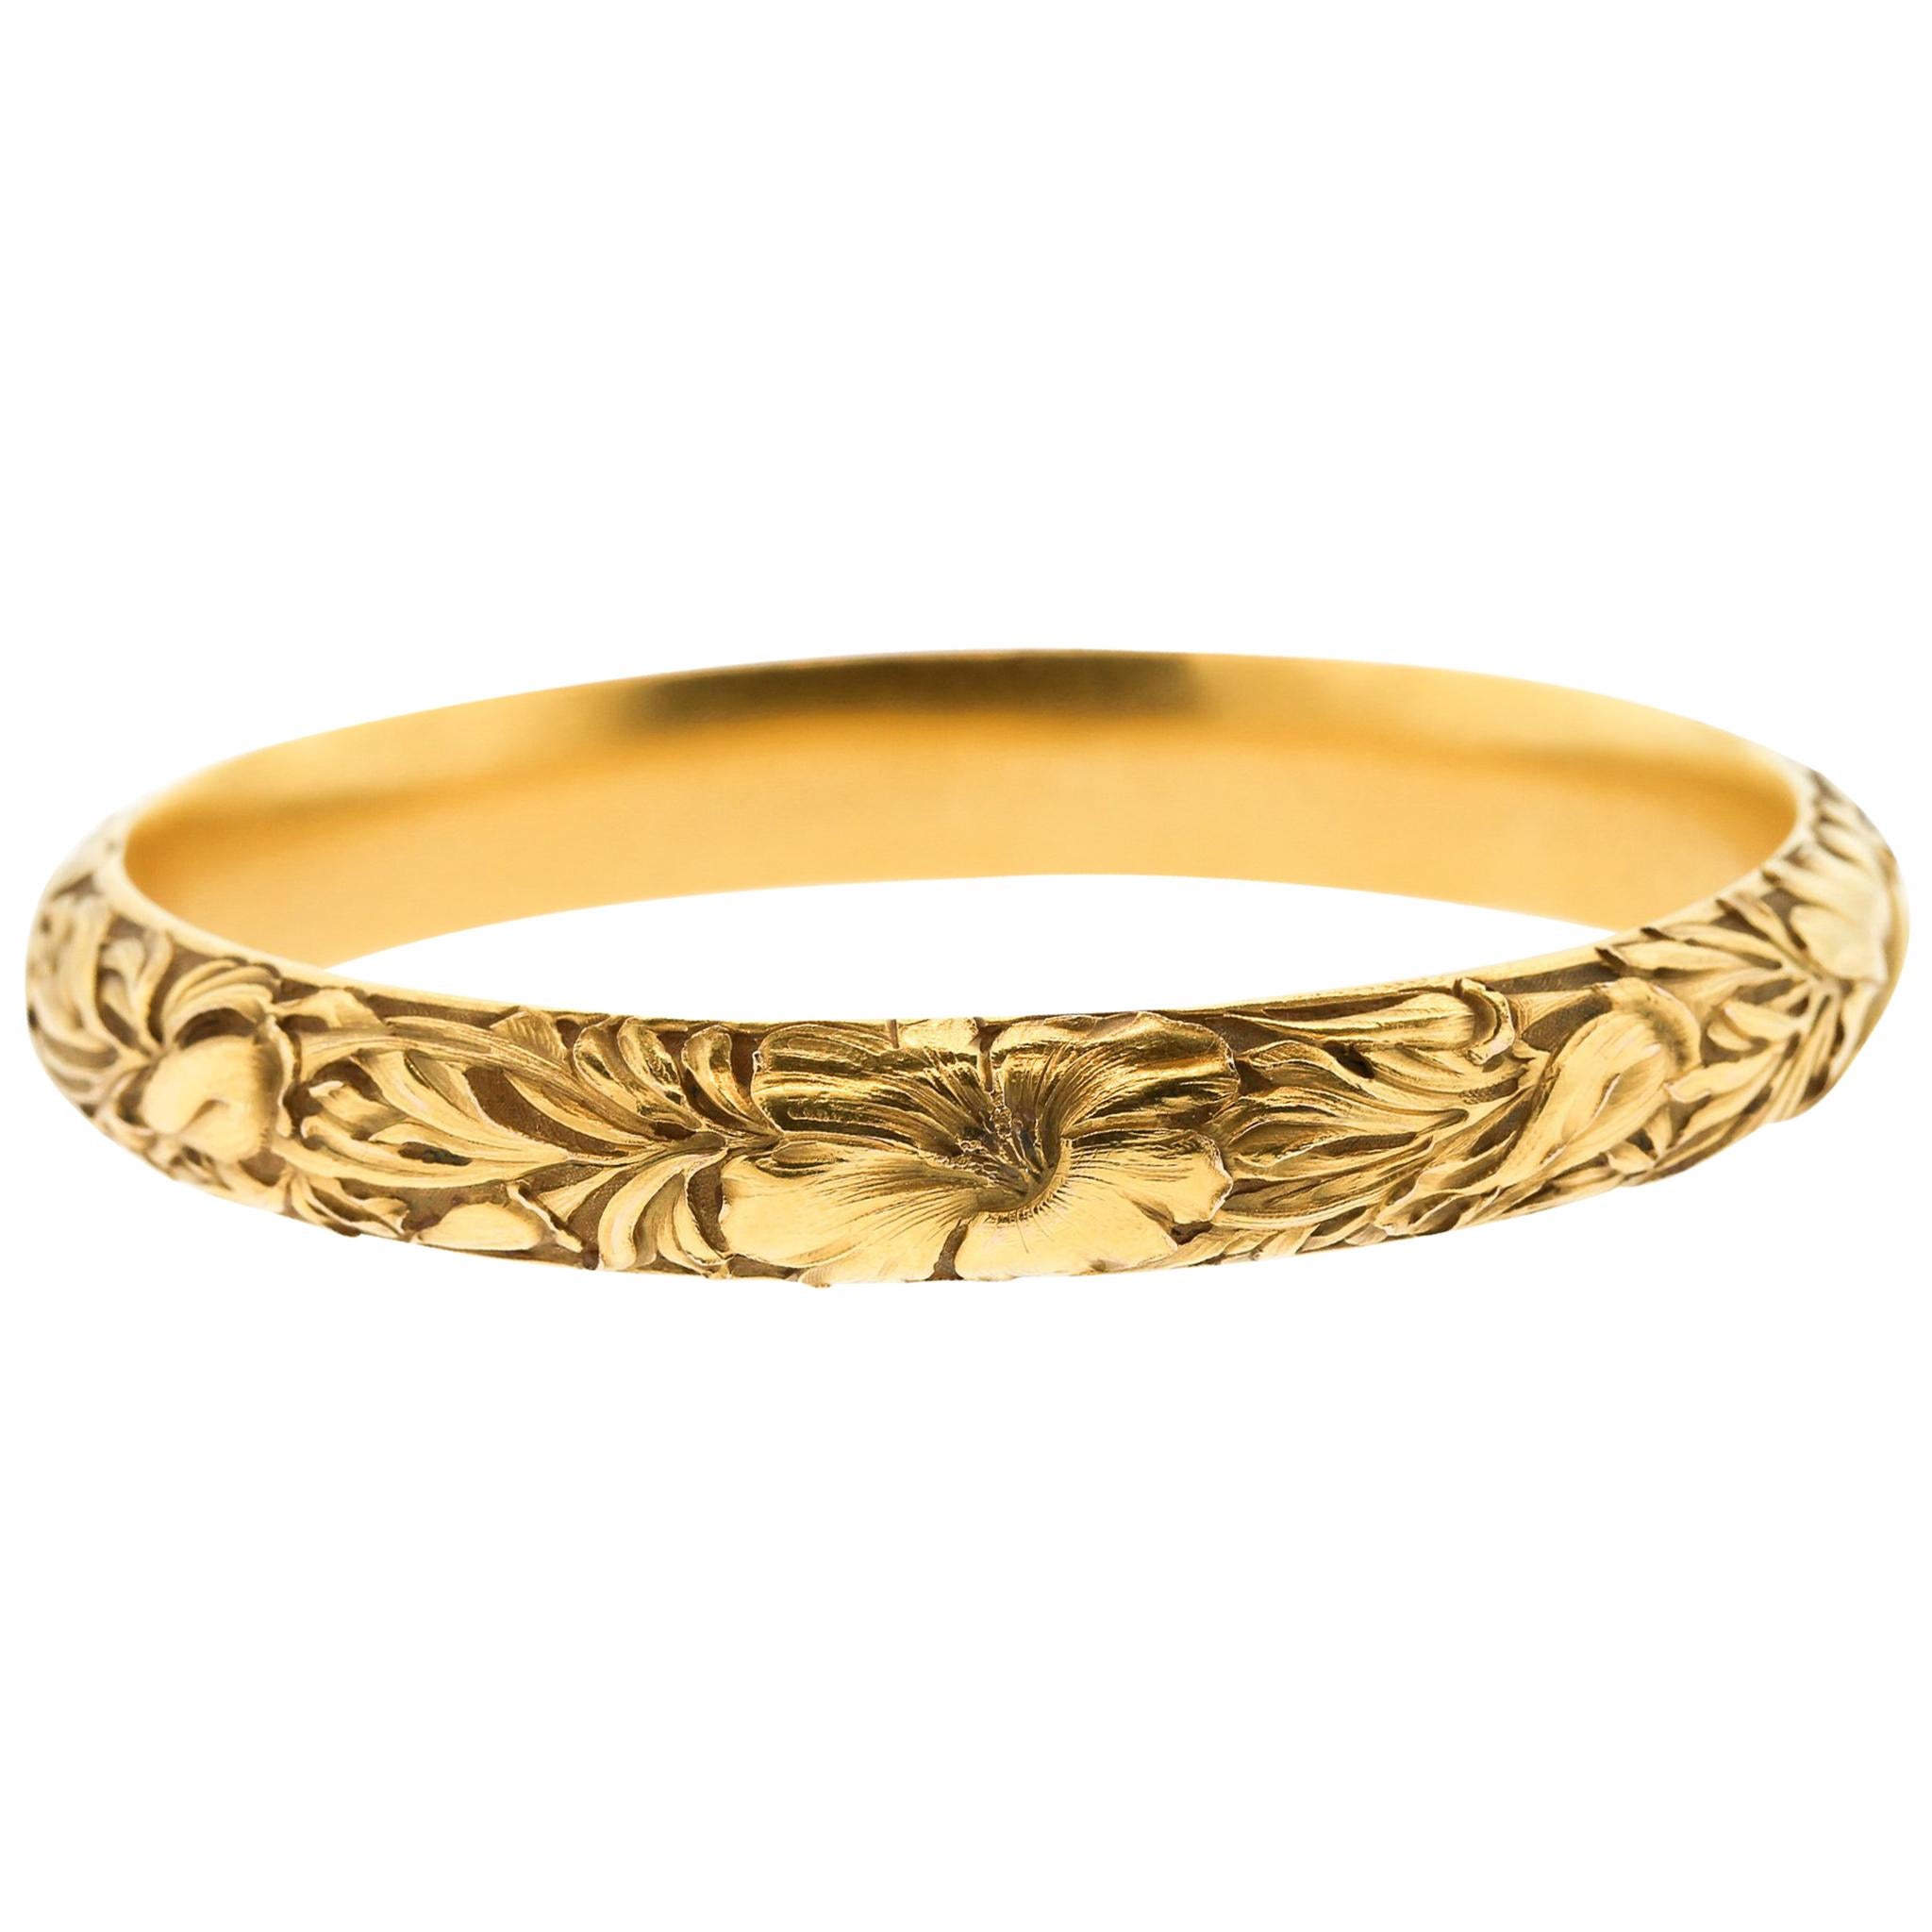 Art Nouveau Etched 14 Karat Gold Floral Bangle Bracelet by Shreve & Co.